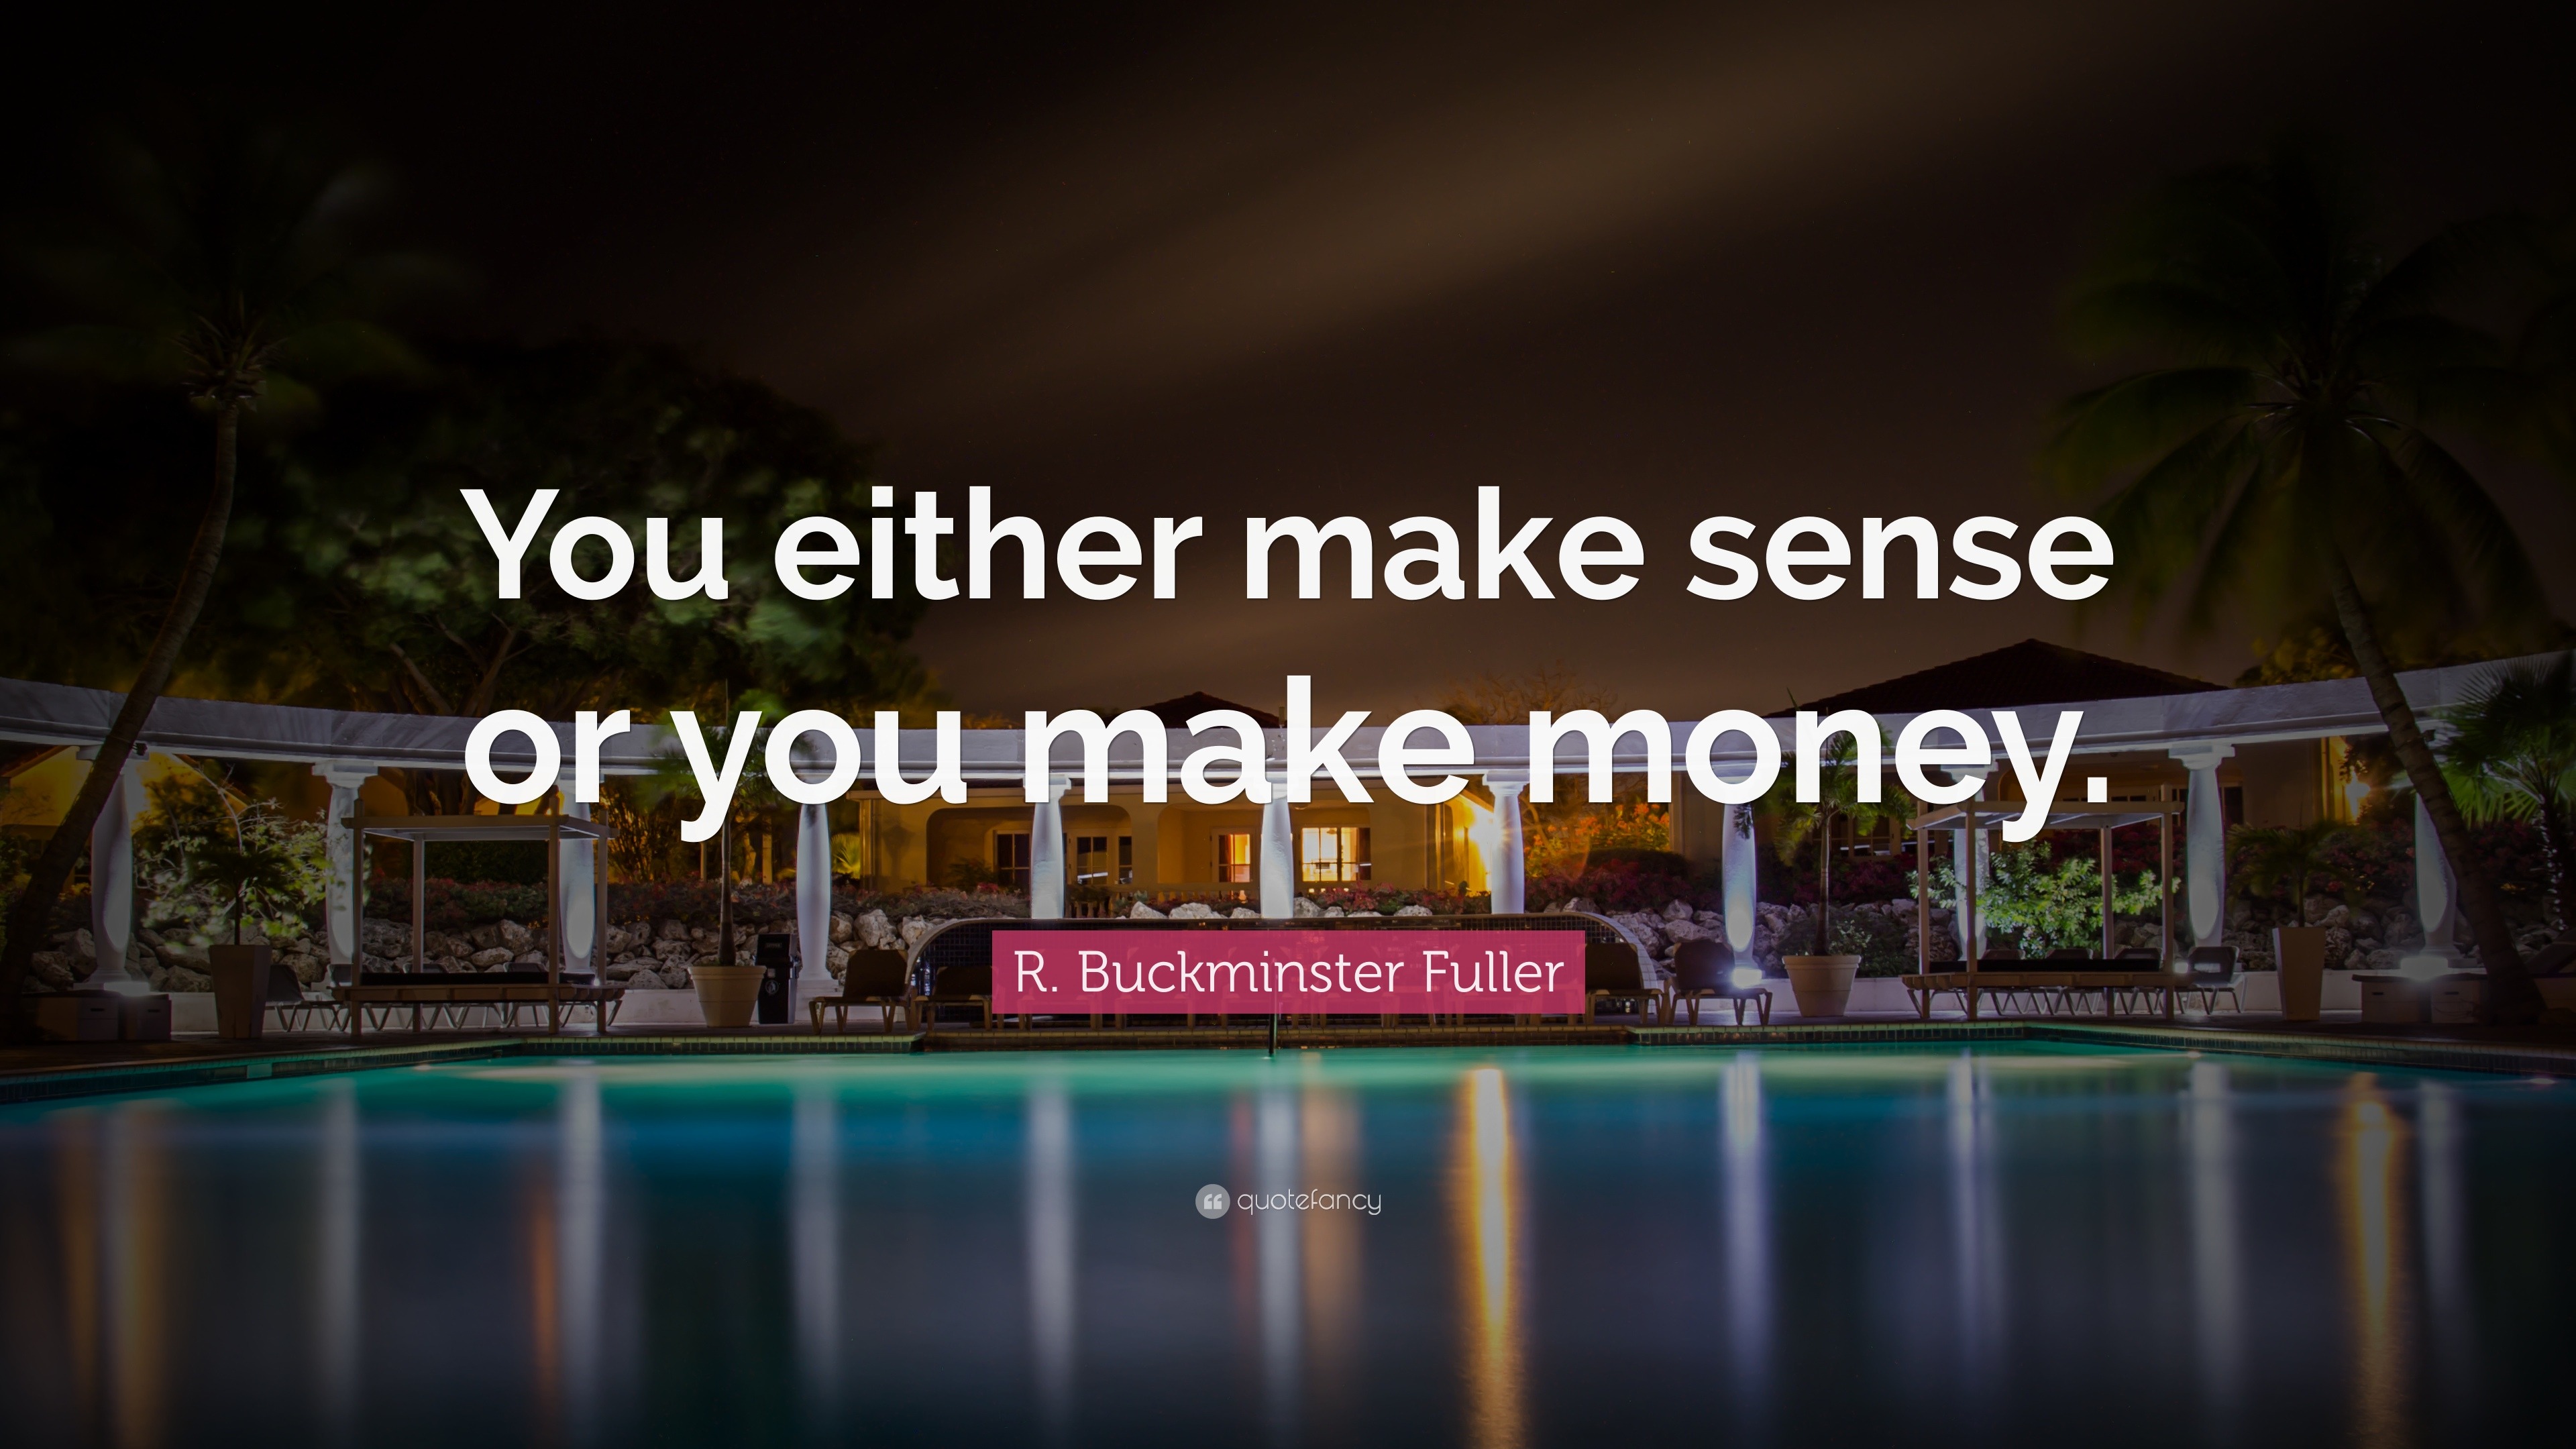 R Buckminster Fuller Quote “You either make sense or you make money